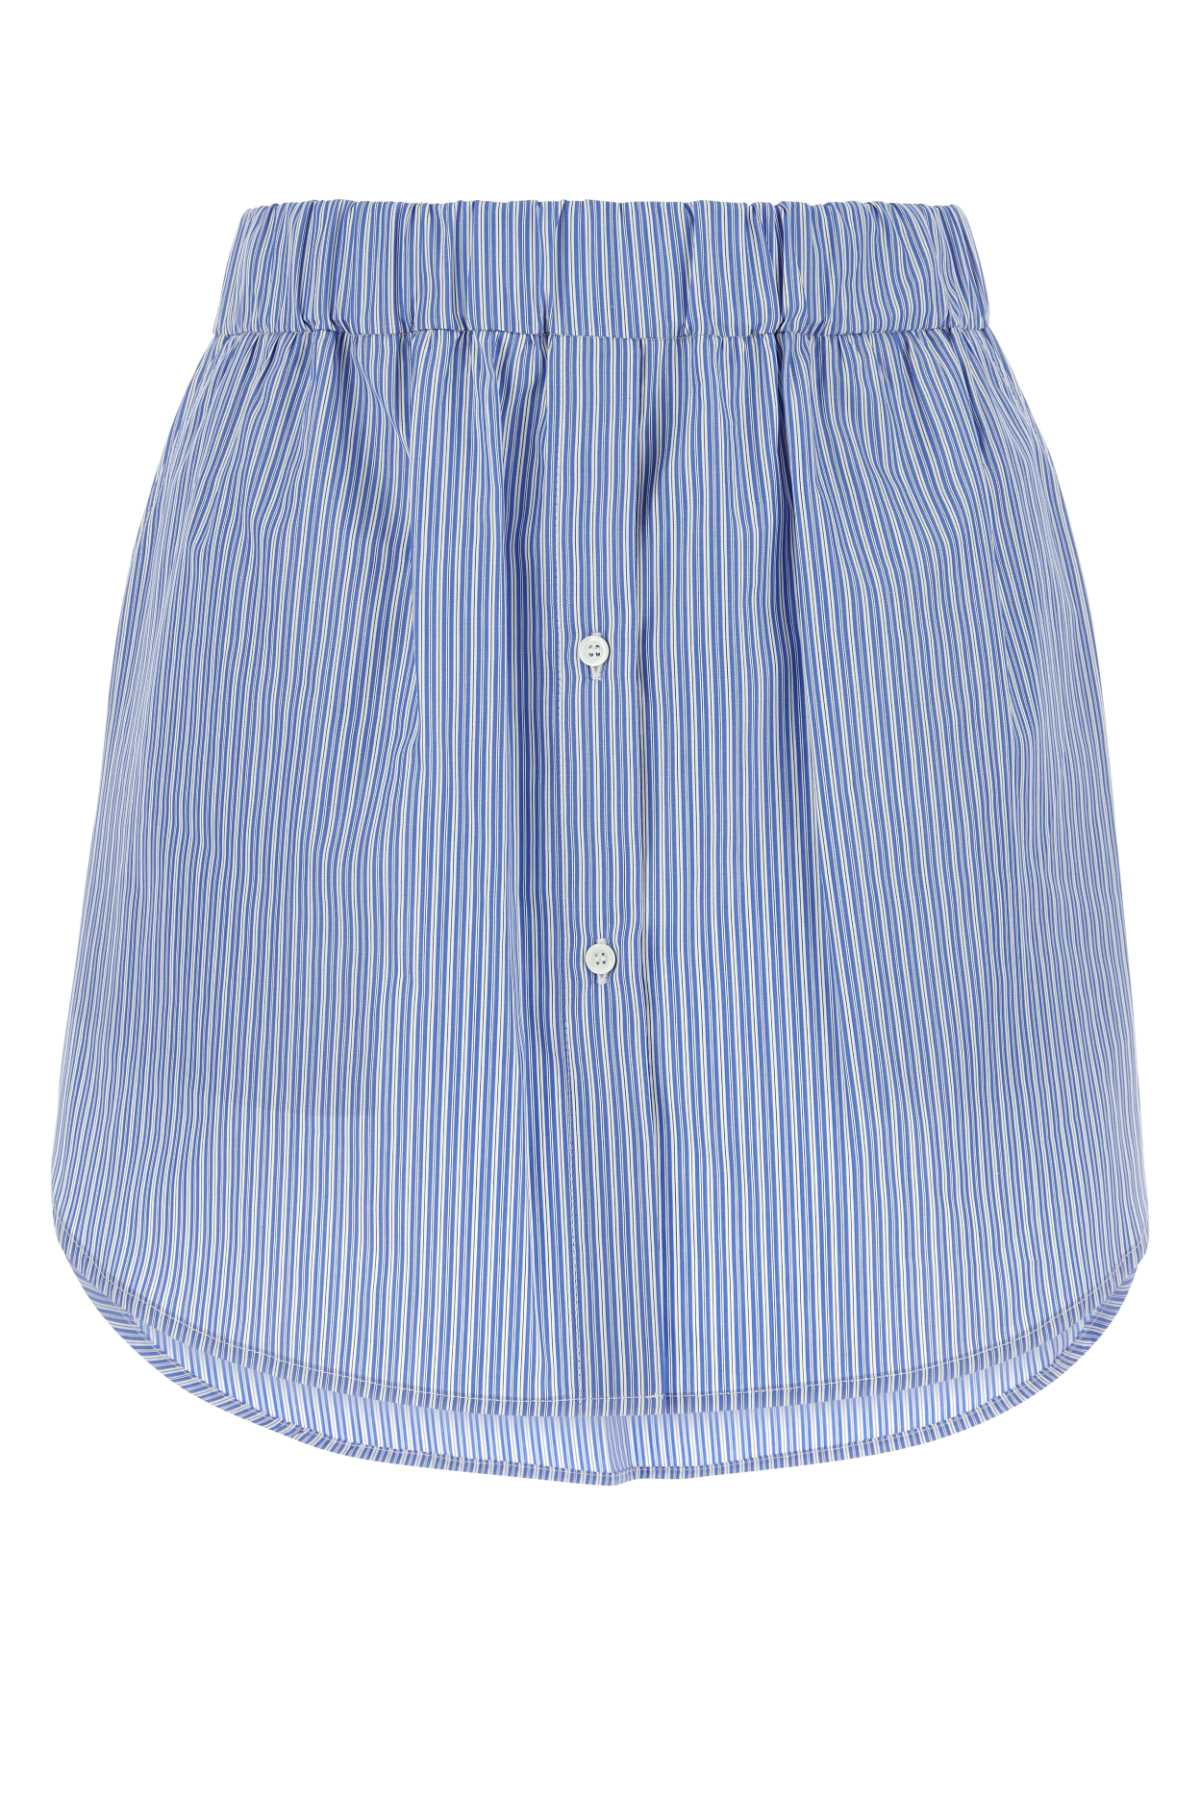 Loewe Printed Cotton Mini Skirt